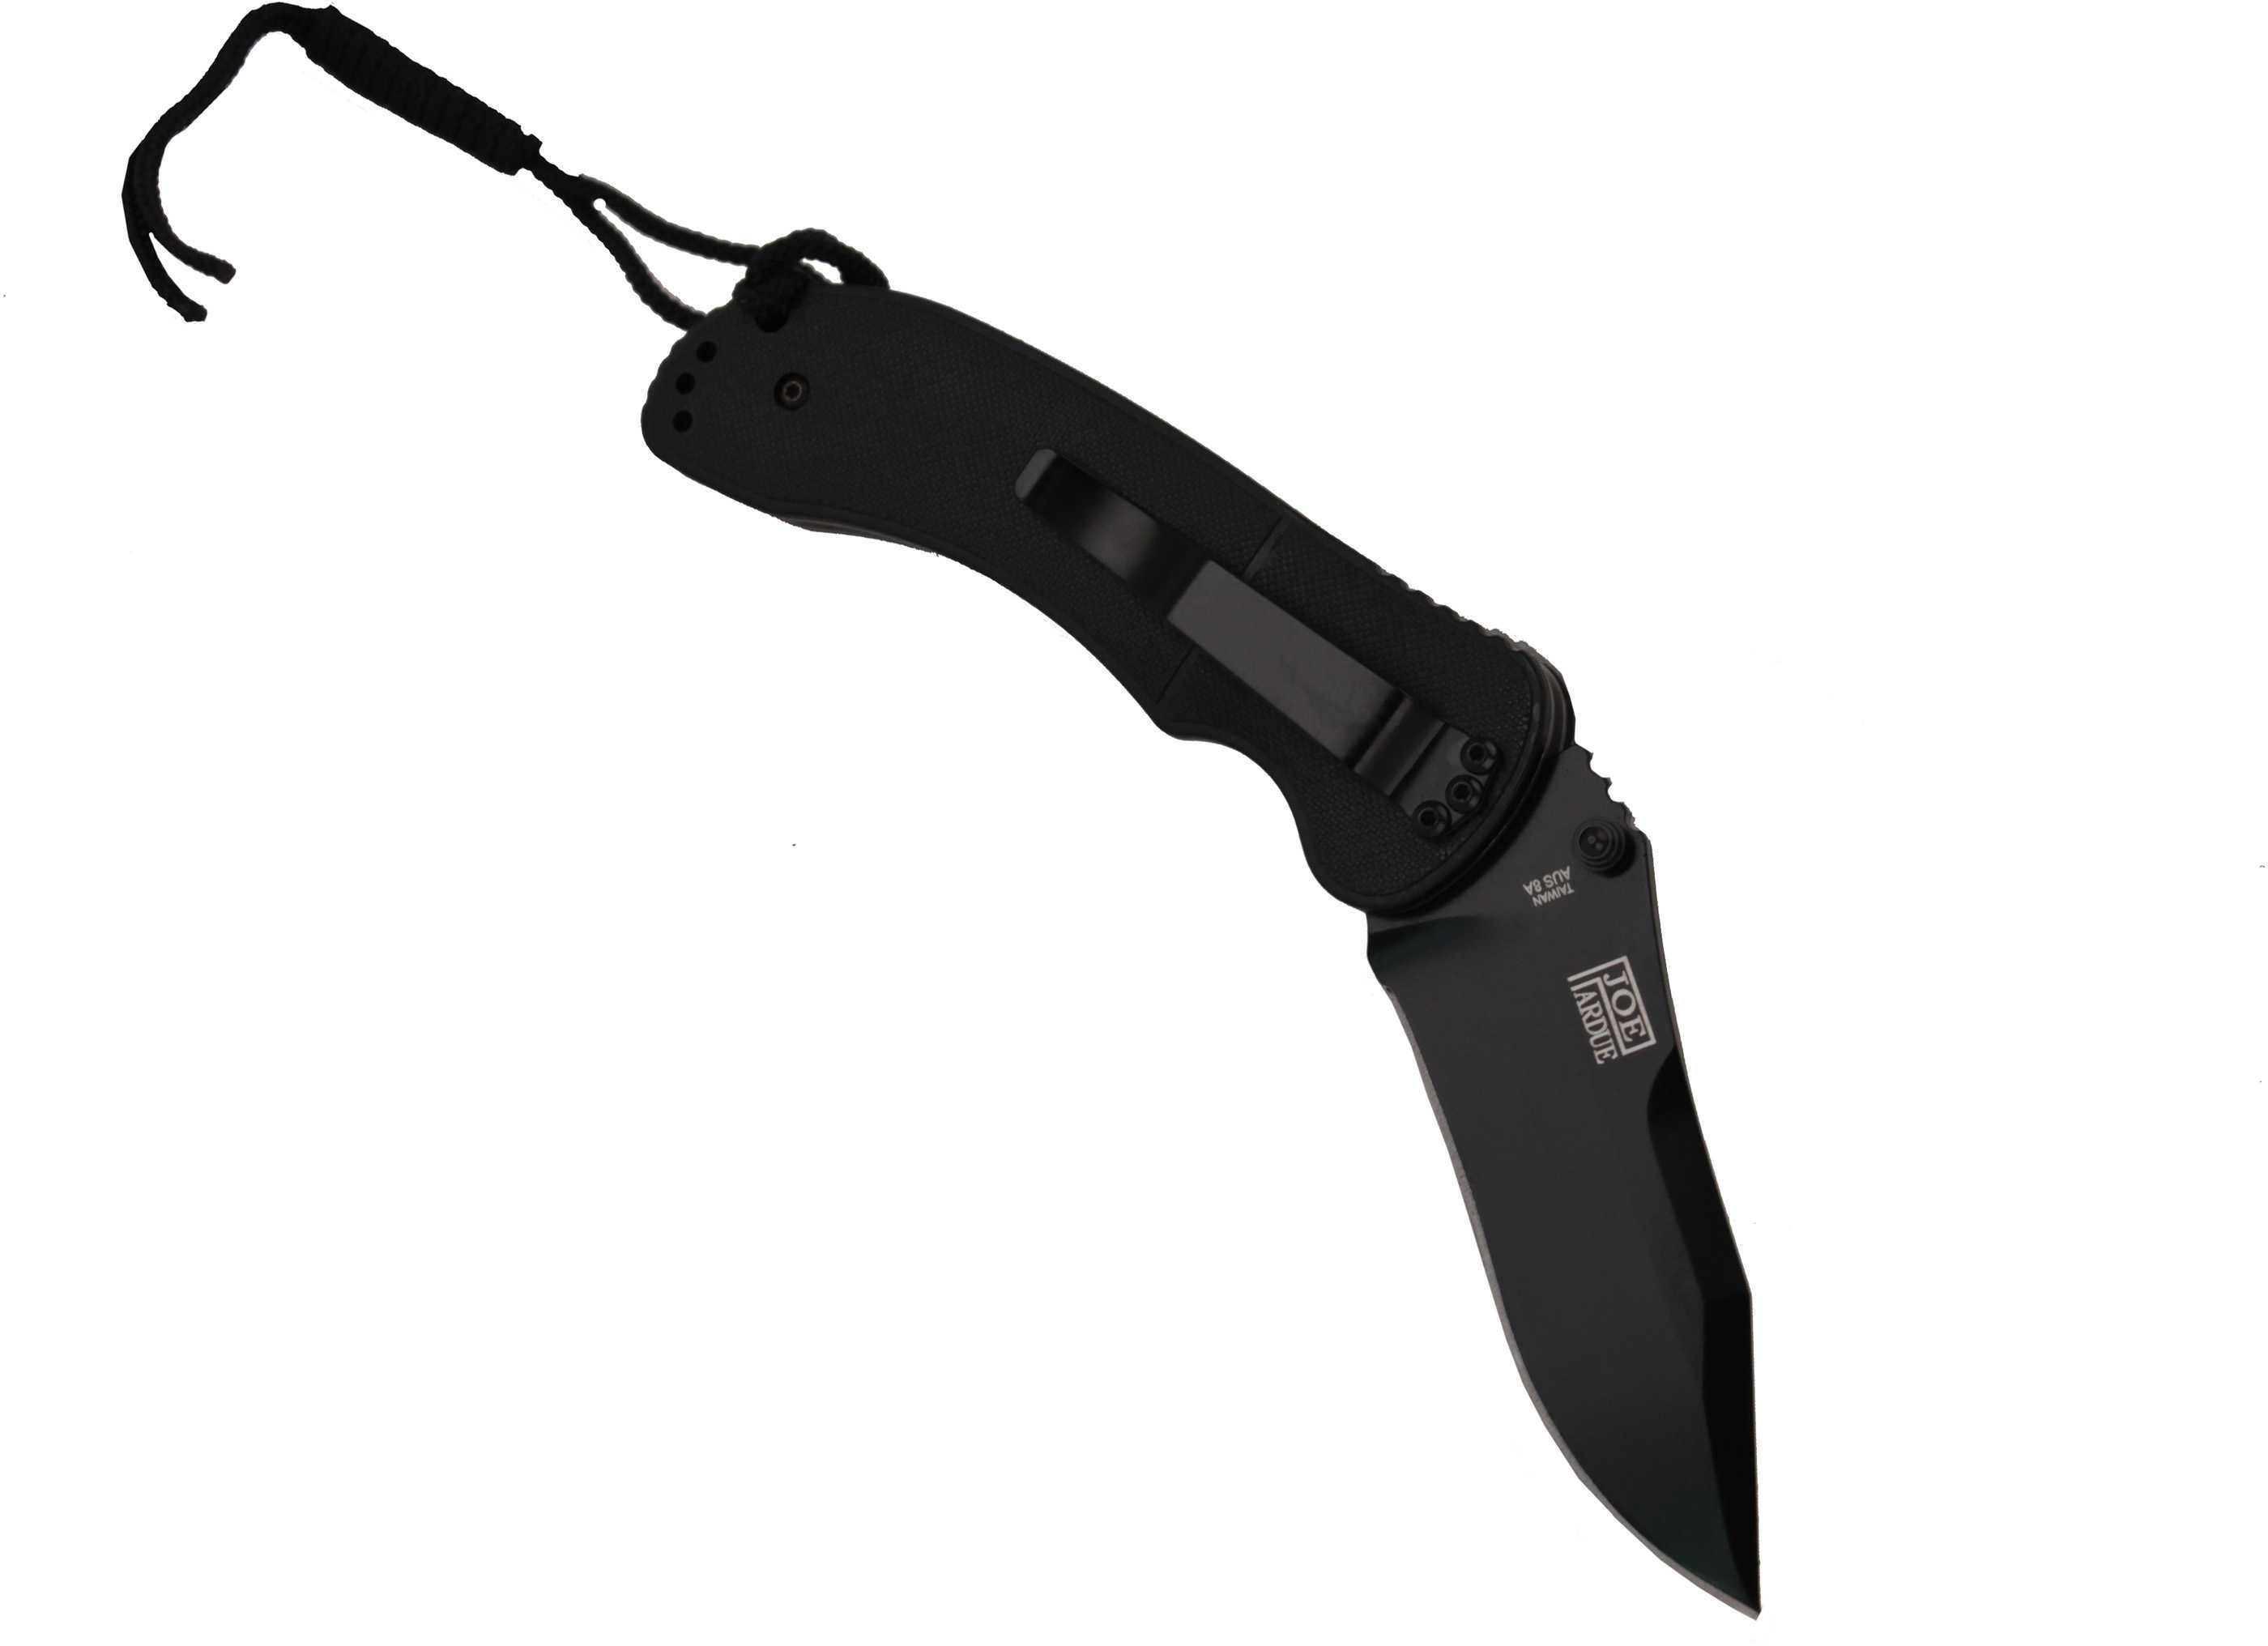 Ontario Knife Co JPT-3R Dp Folding Black Rnd BP